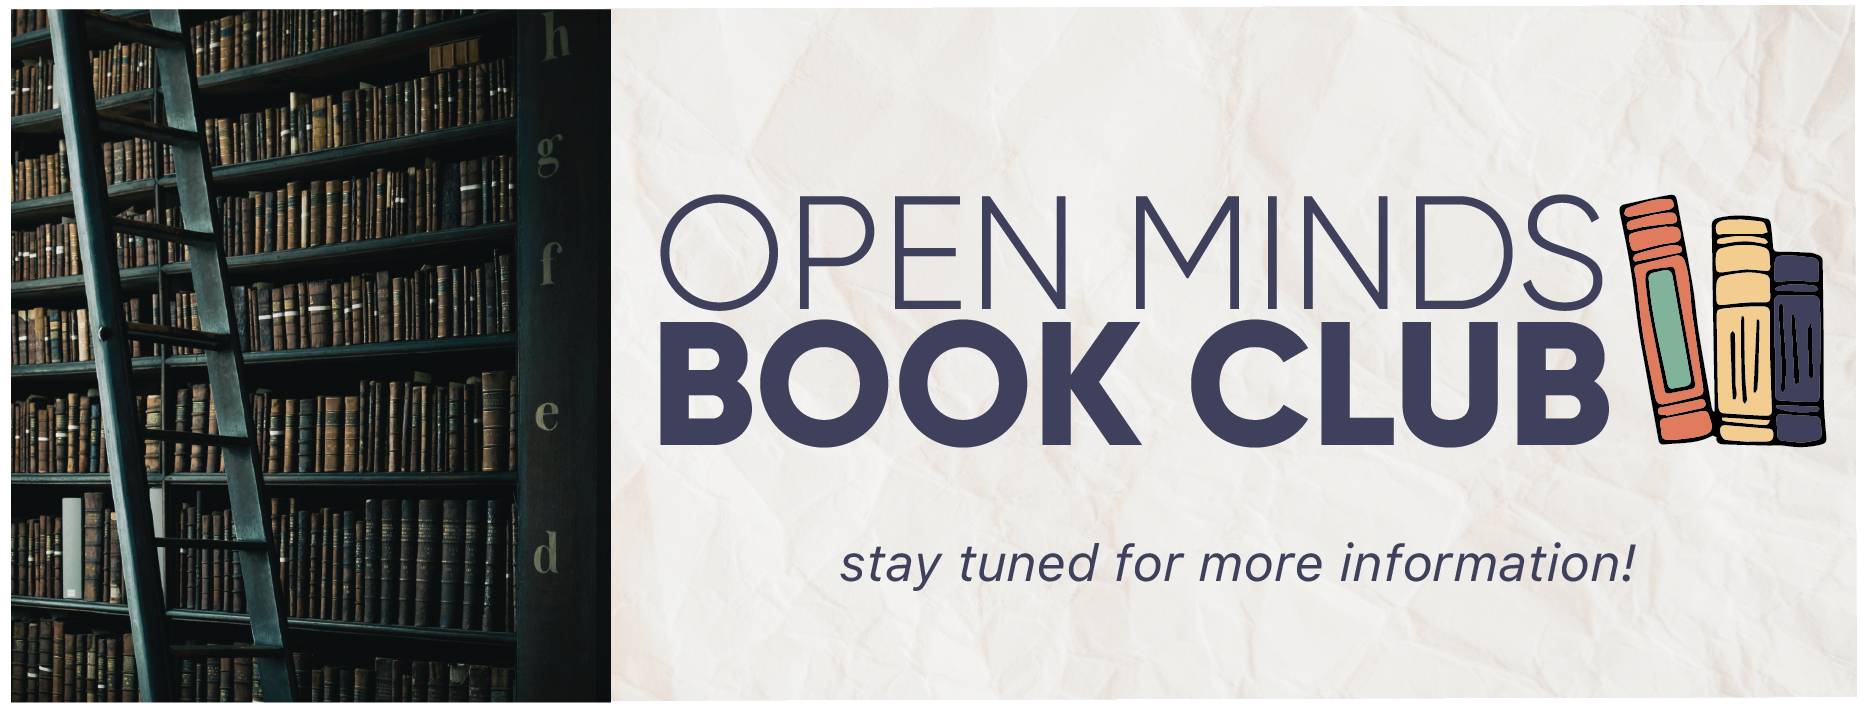 Open Minds Book Club: for more information visit gvsu.edu/hc/bookclub